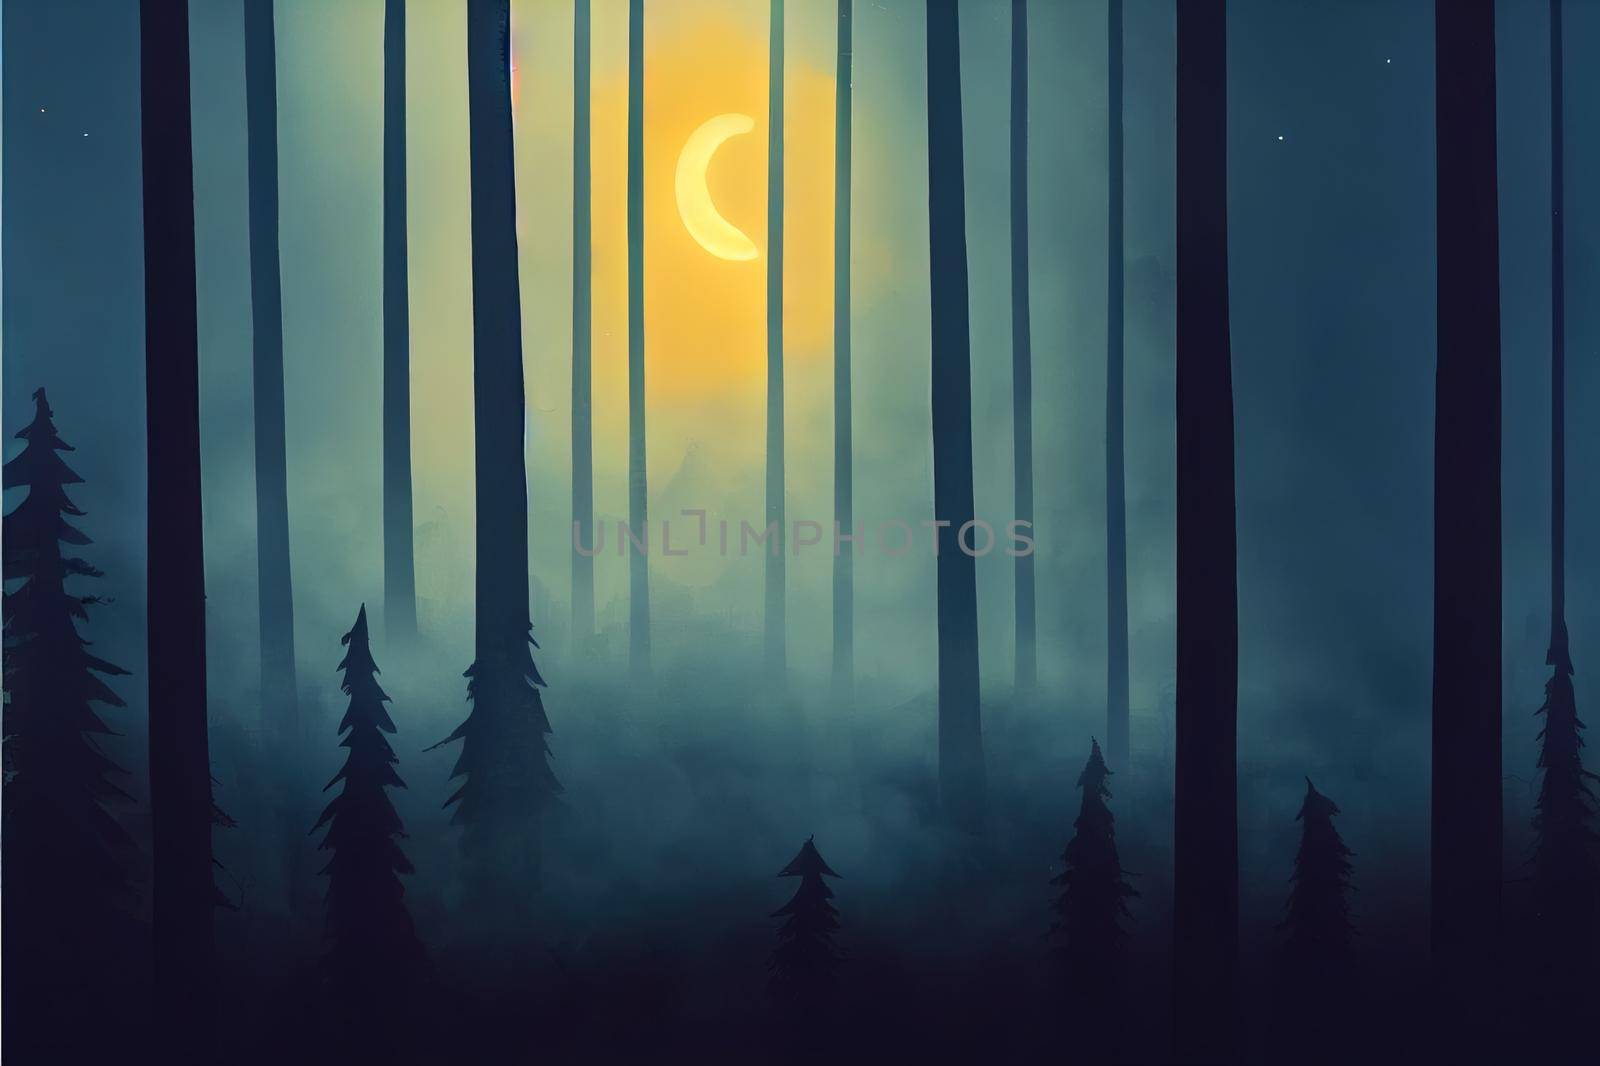 Dark forest. Gloomy dark scene with trees, big moon, by 2ragon